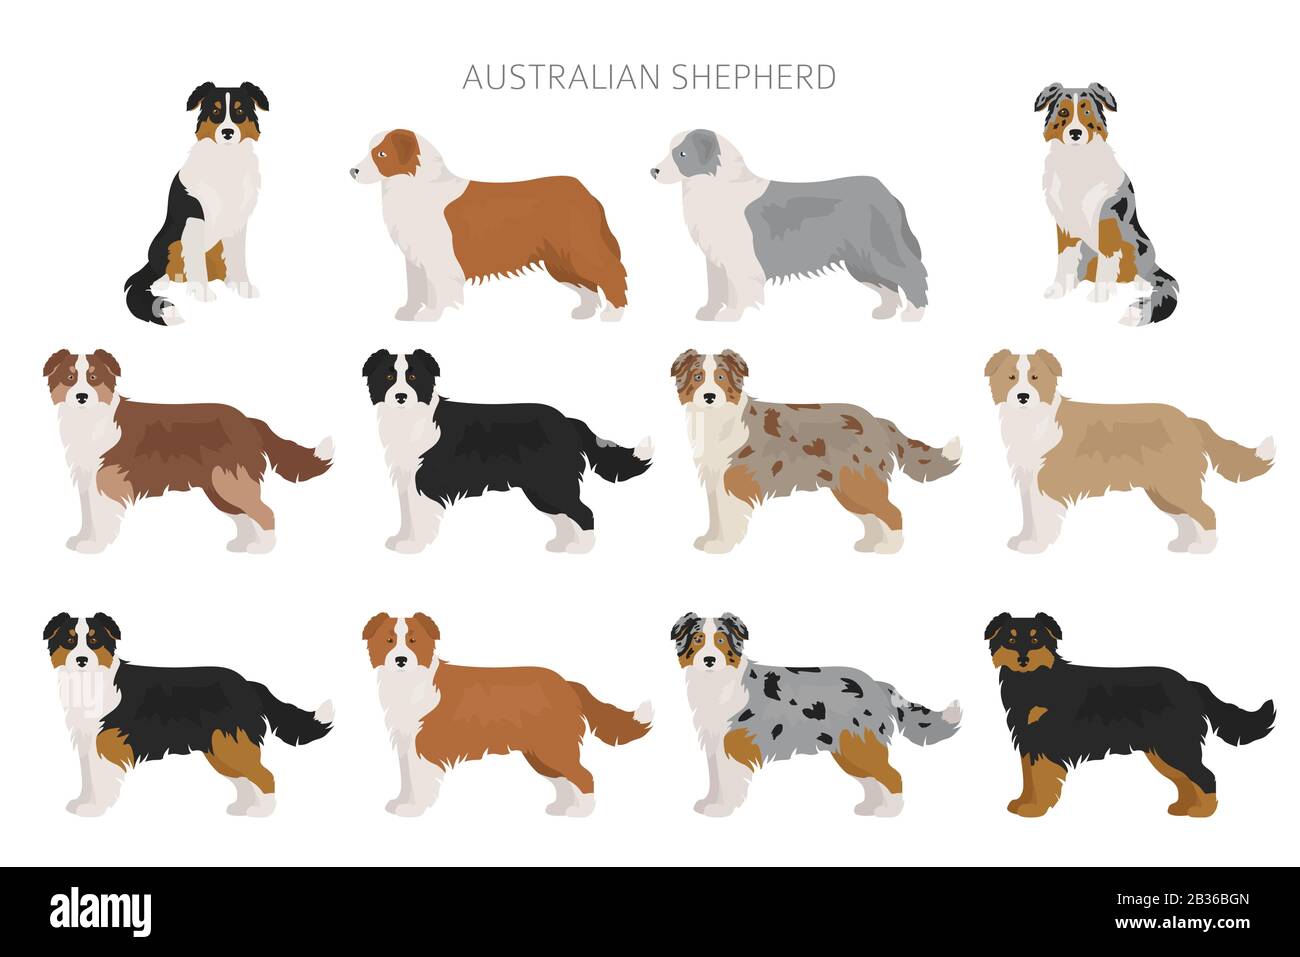 australian shepherd coat colors